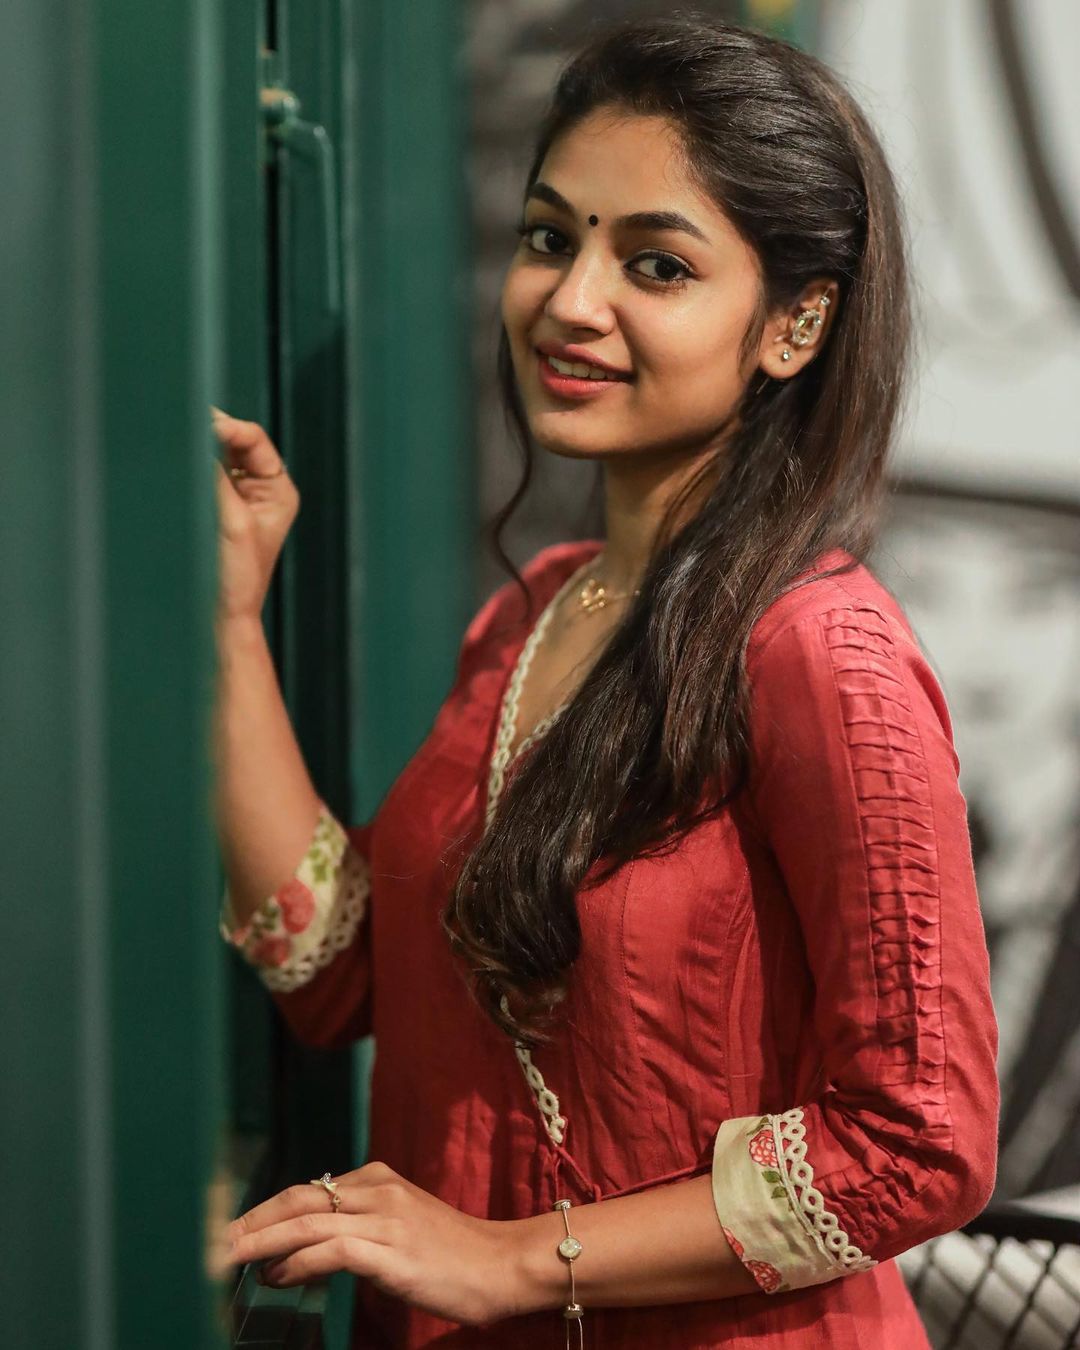 ivana tamil beautiful homely girl wallpaper